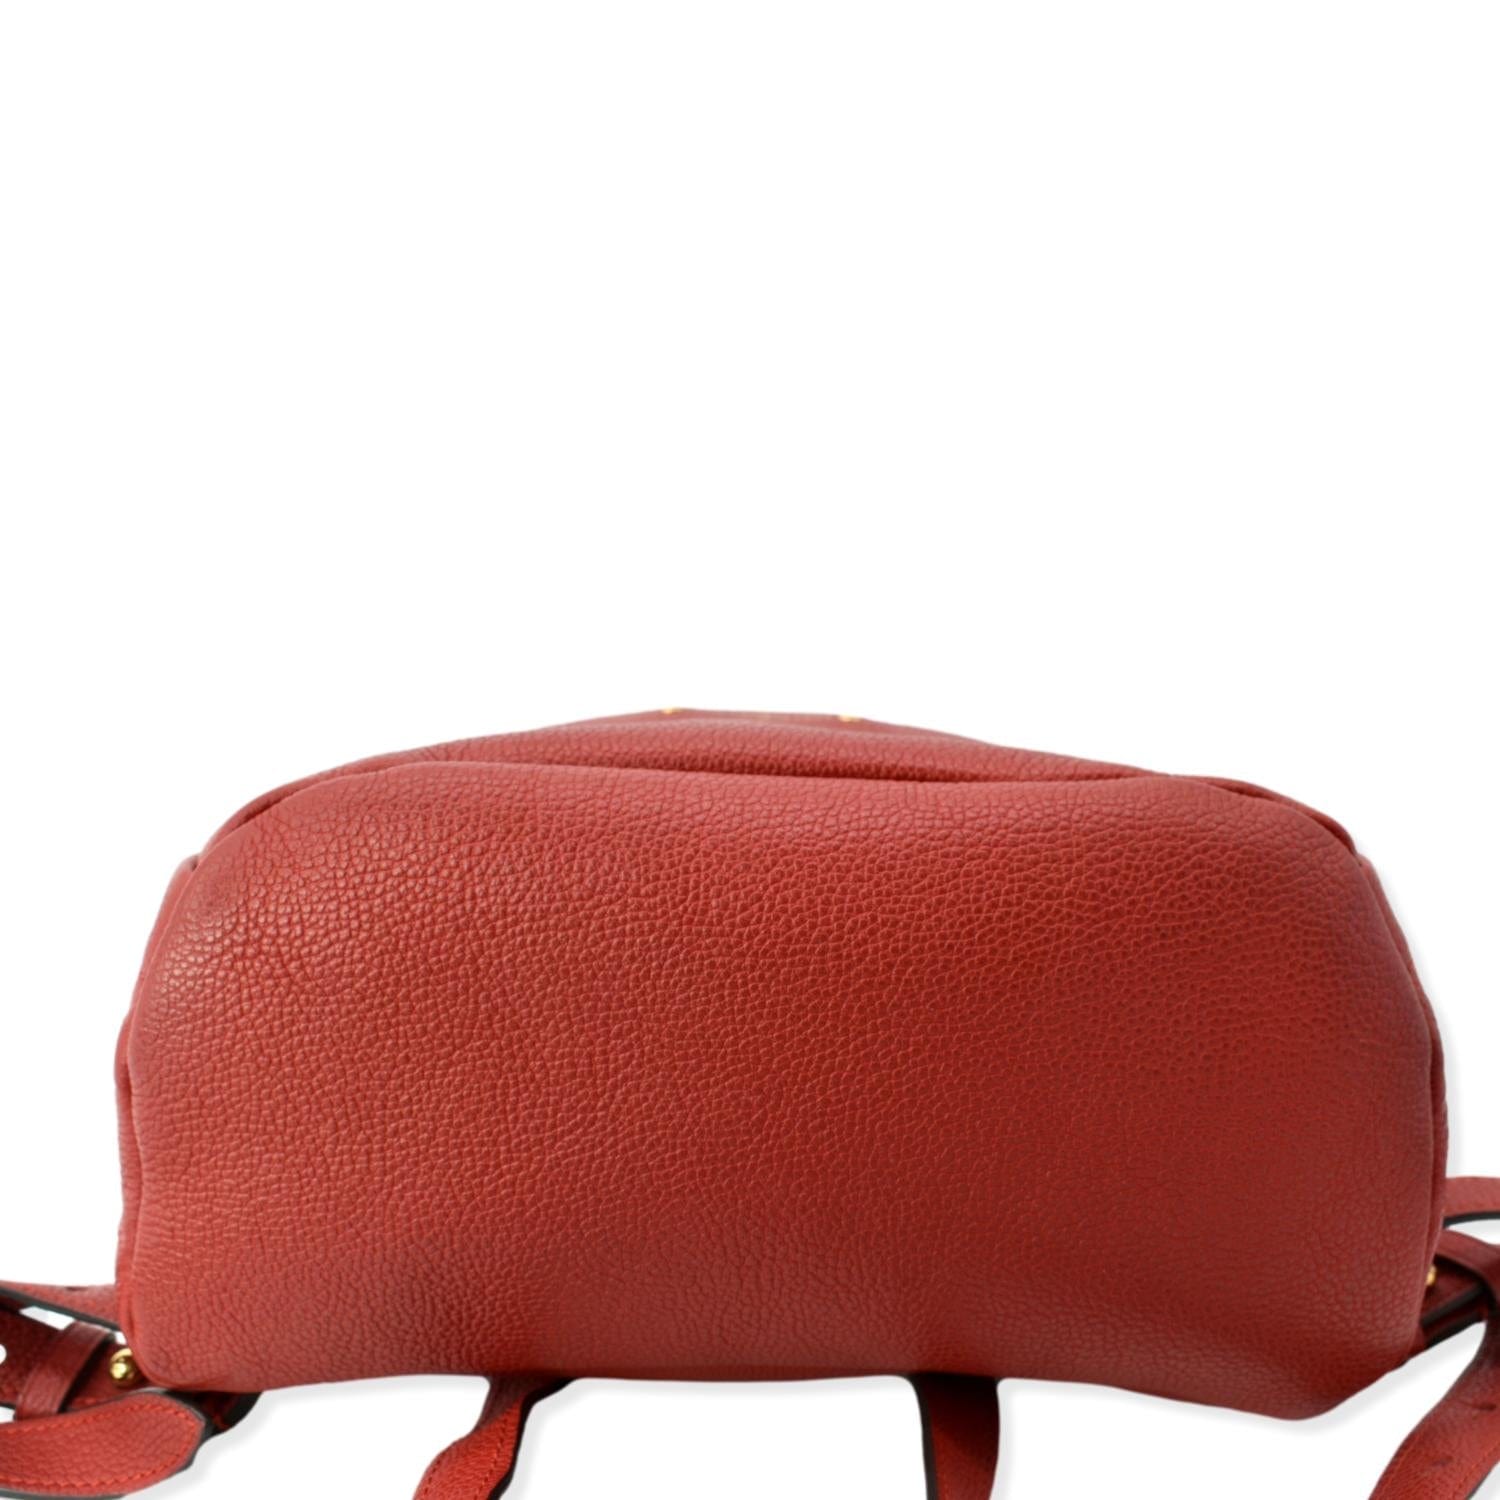 Louis Vuitton Sorbonne Monogram Empreinte Leather Backpack on SALE